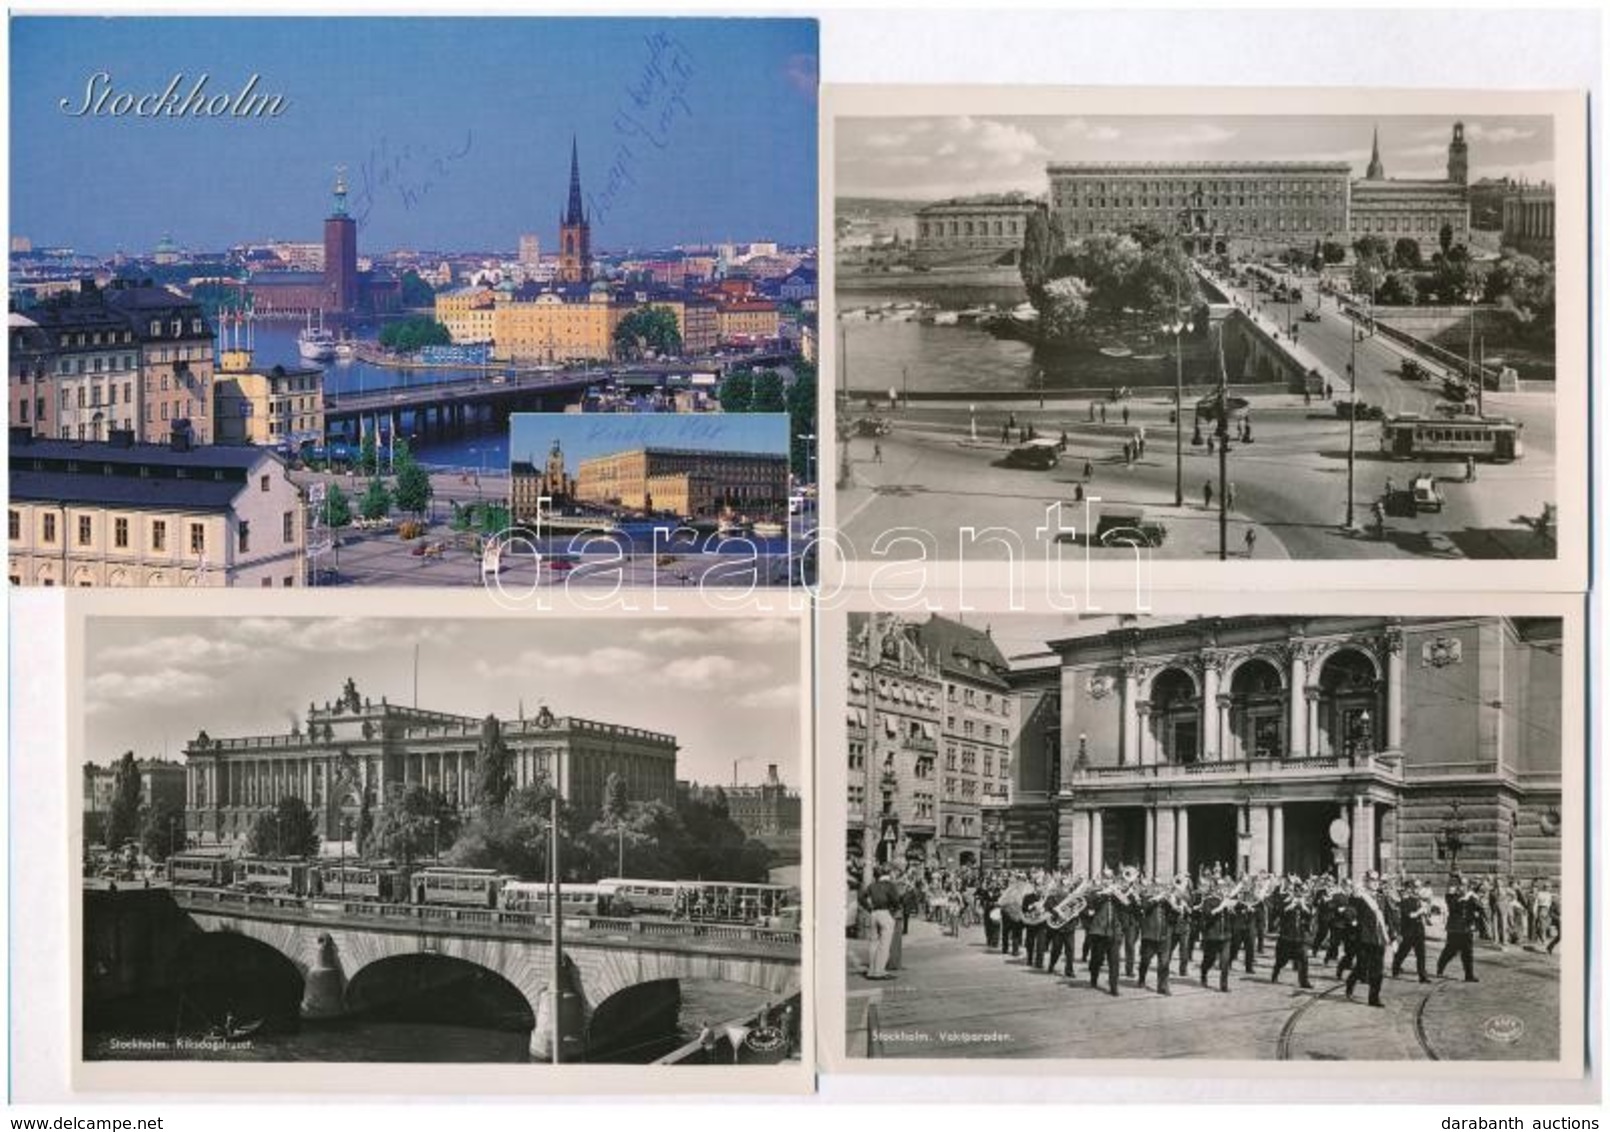 ** * 11 Db MODERN Svéd Városképes Lap: Stockholm / 11 Modern Swedish Town-view Postcards: Stockholm - Zonder Classificatie